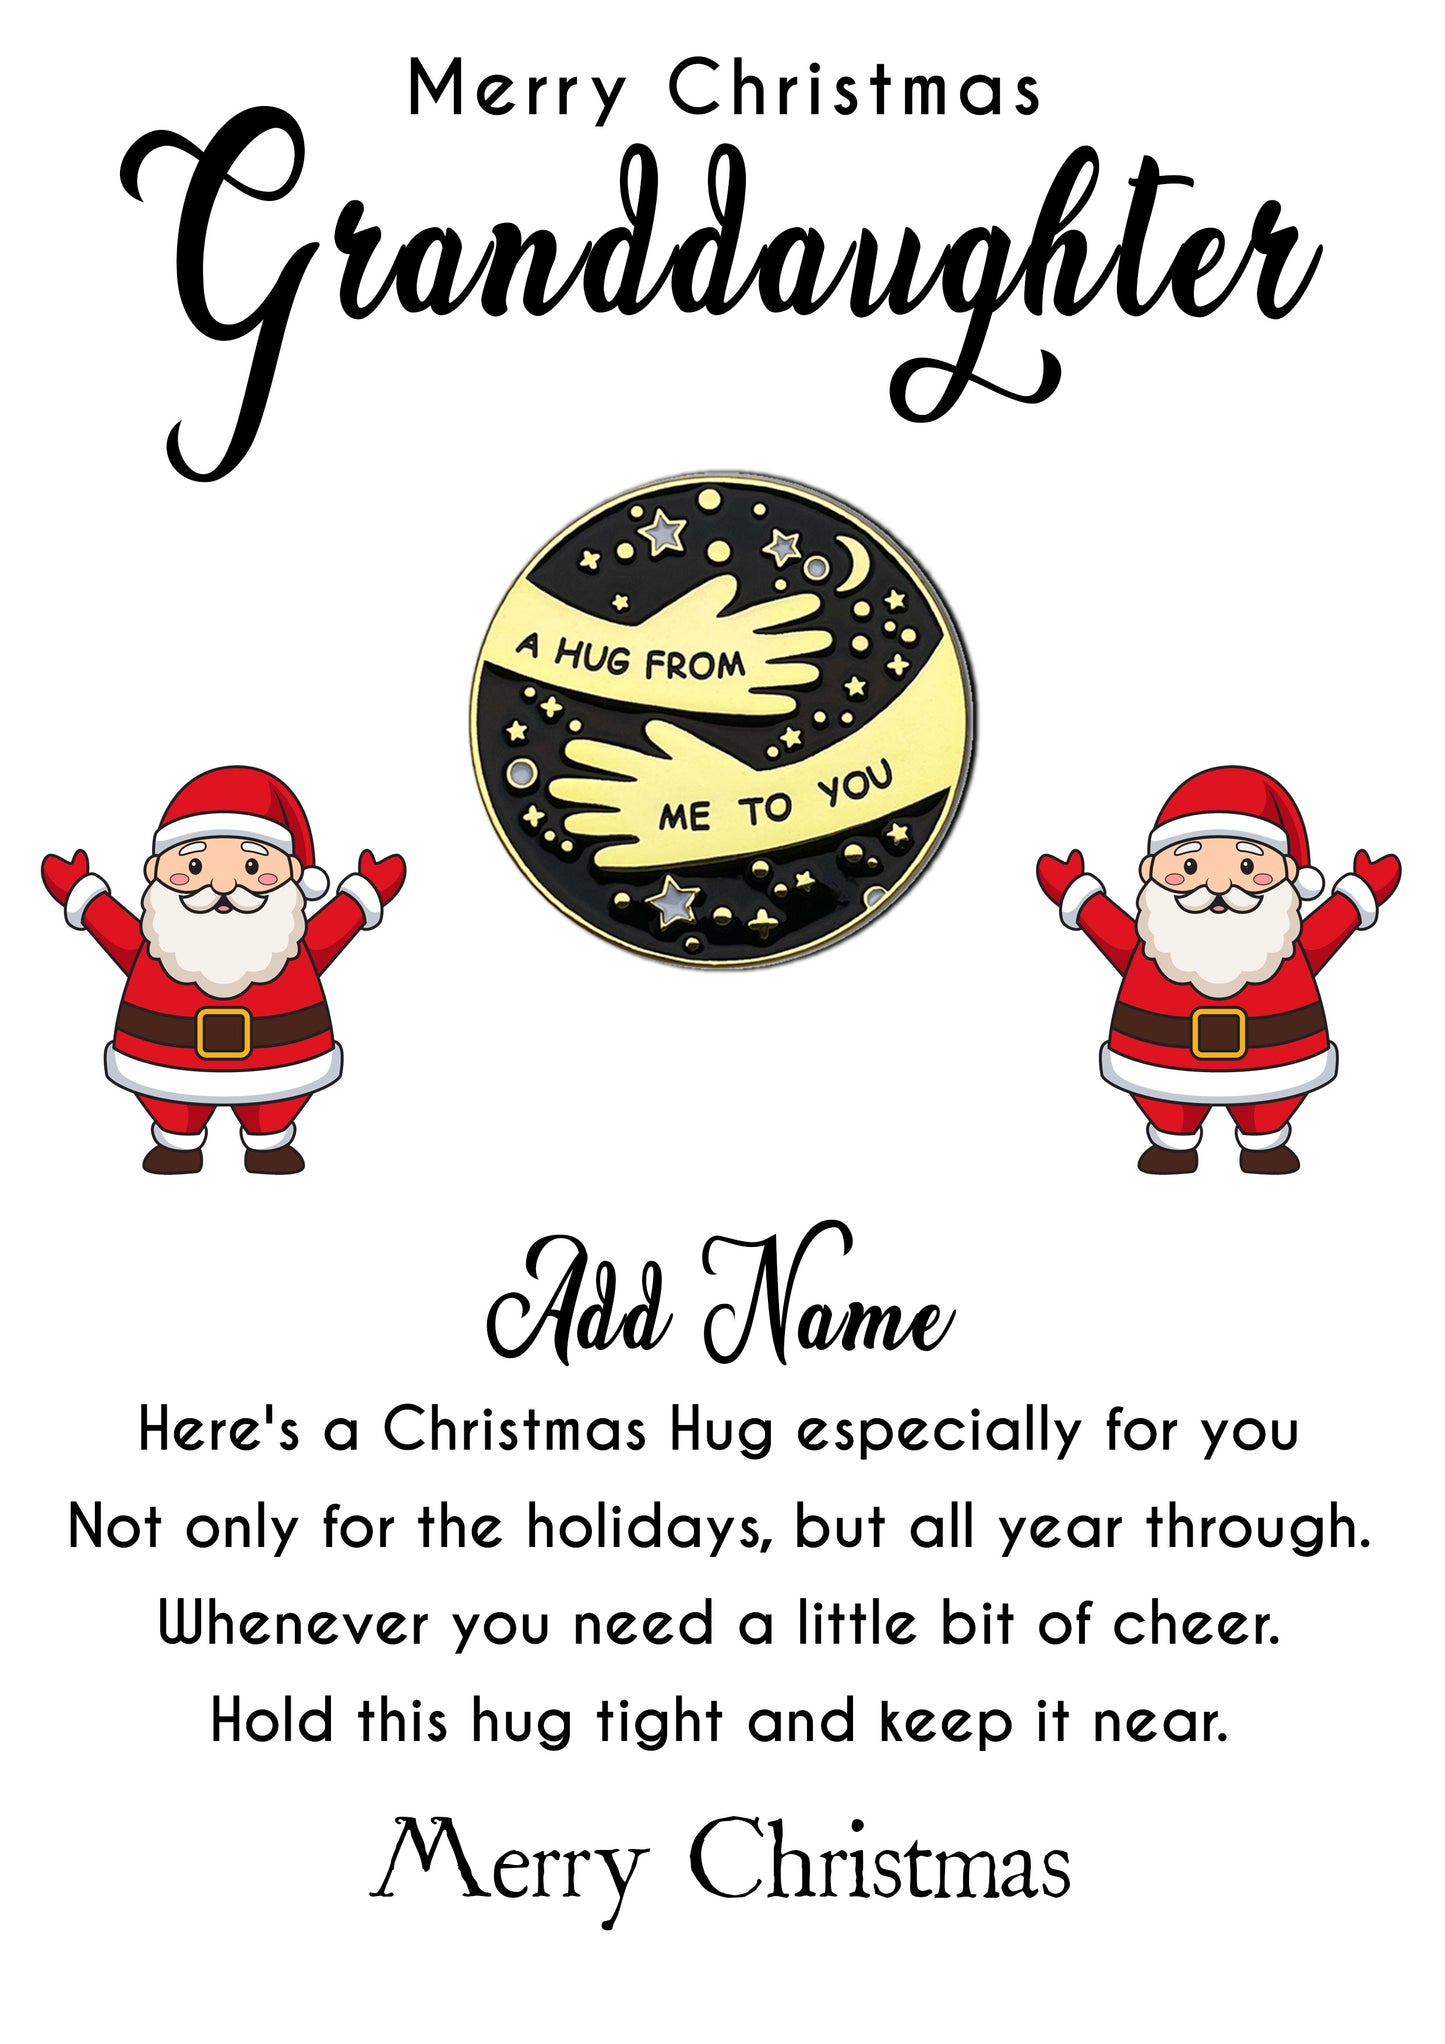 Santa Claus Hug Pin Badges & Personalised Granddaughter Message Card